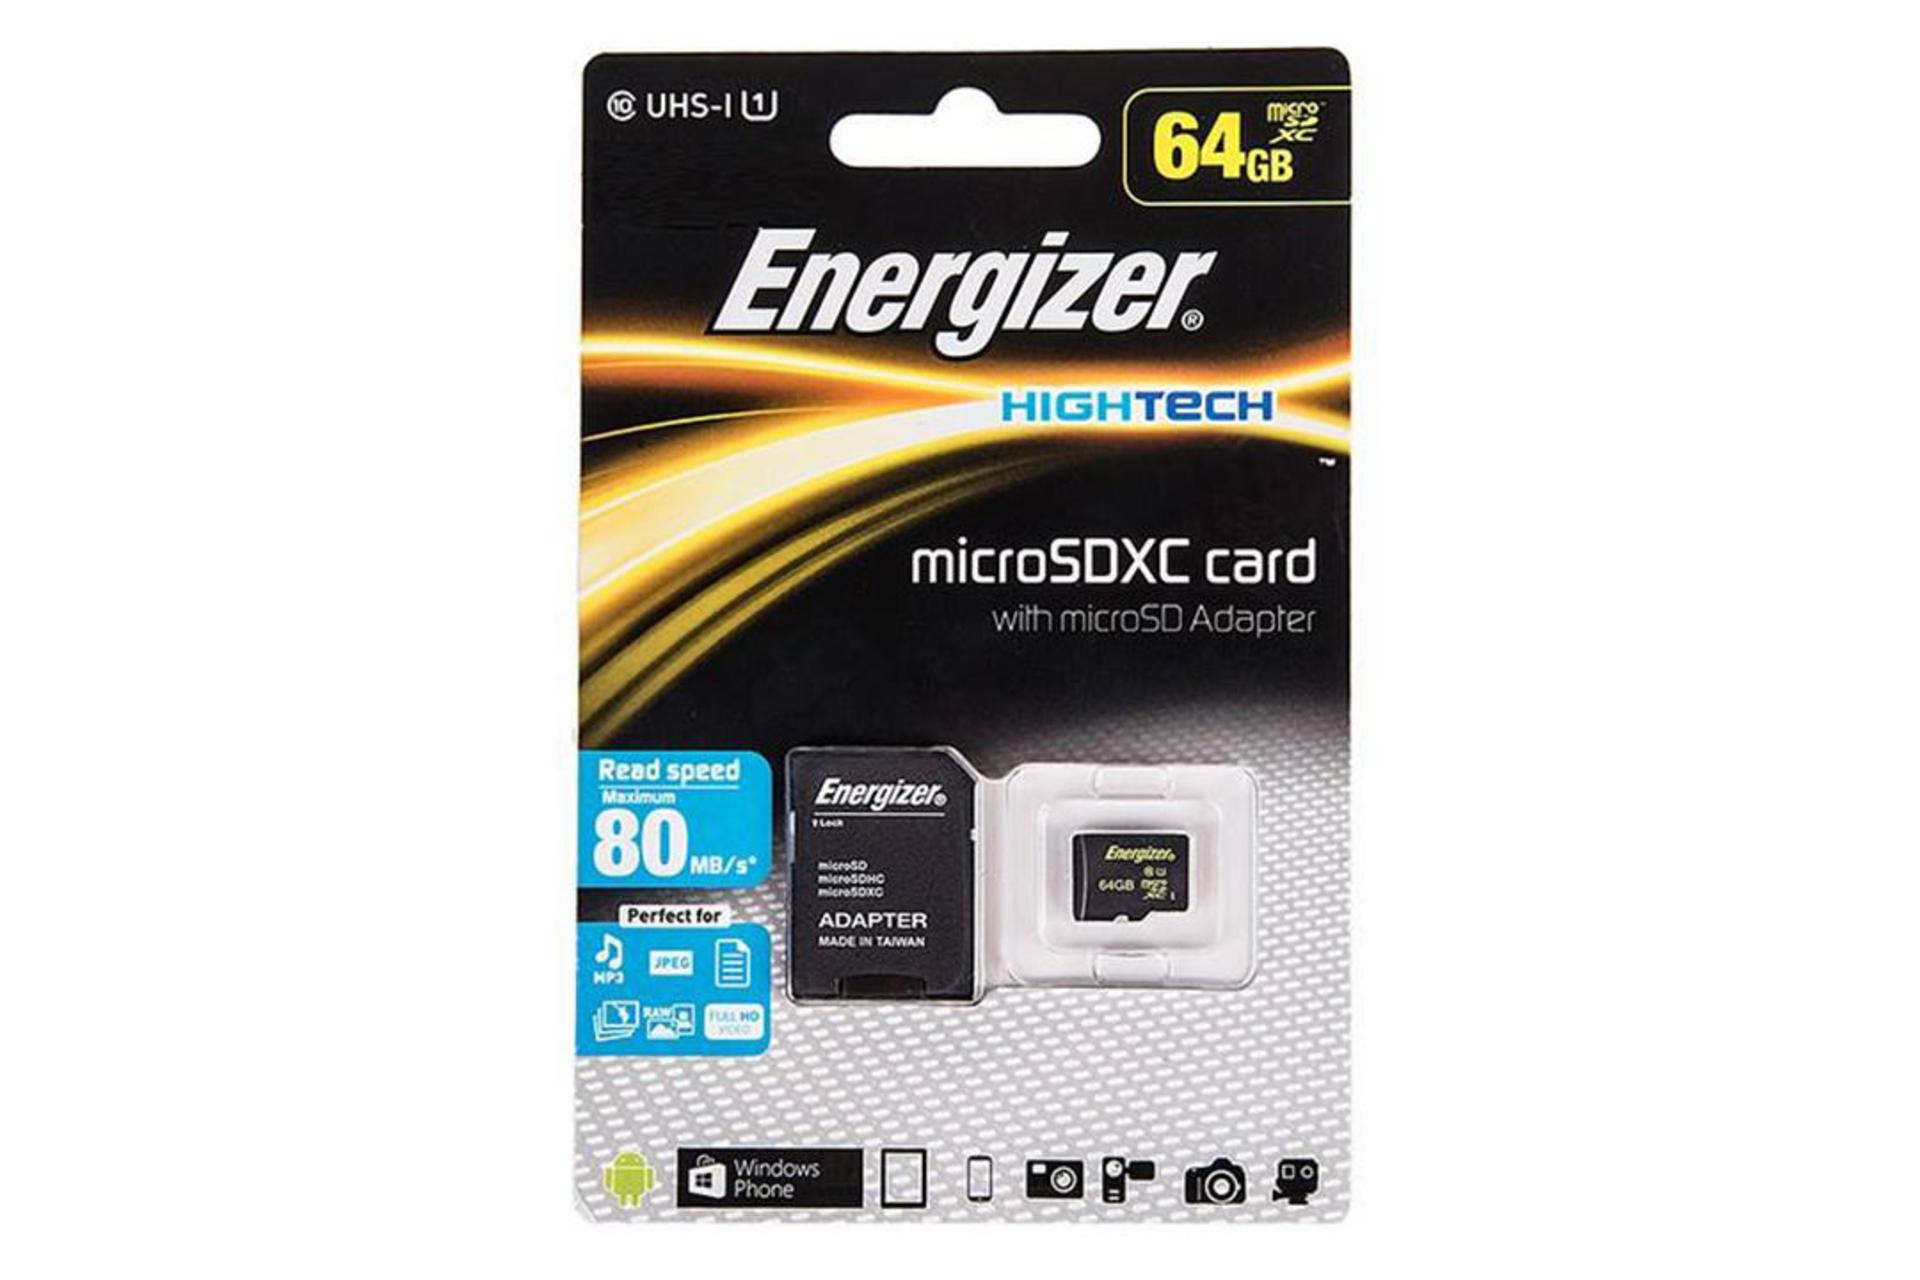 Energizer Hightech microSDXC Class 10 UHS-I U1 64GB